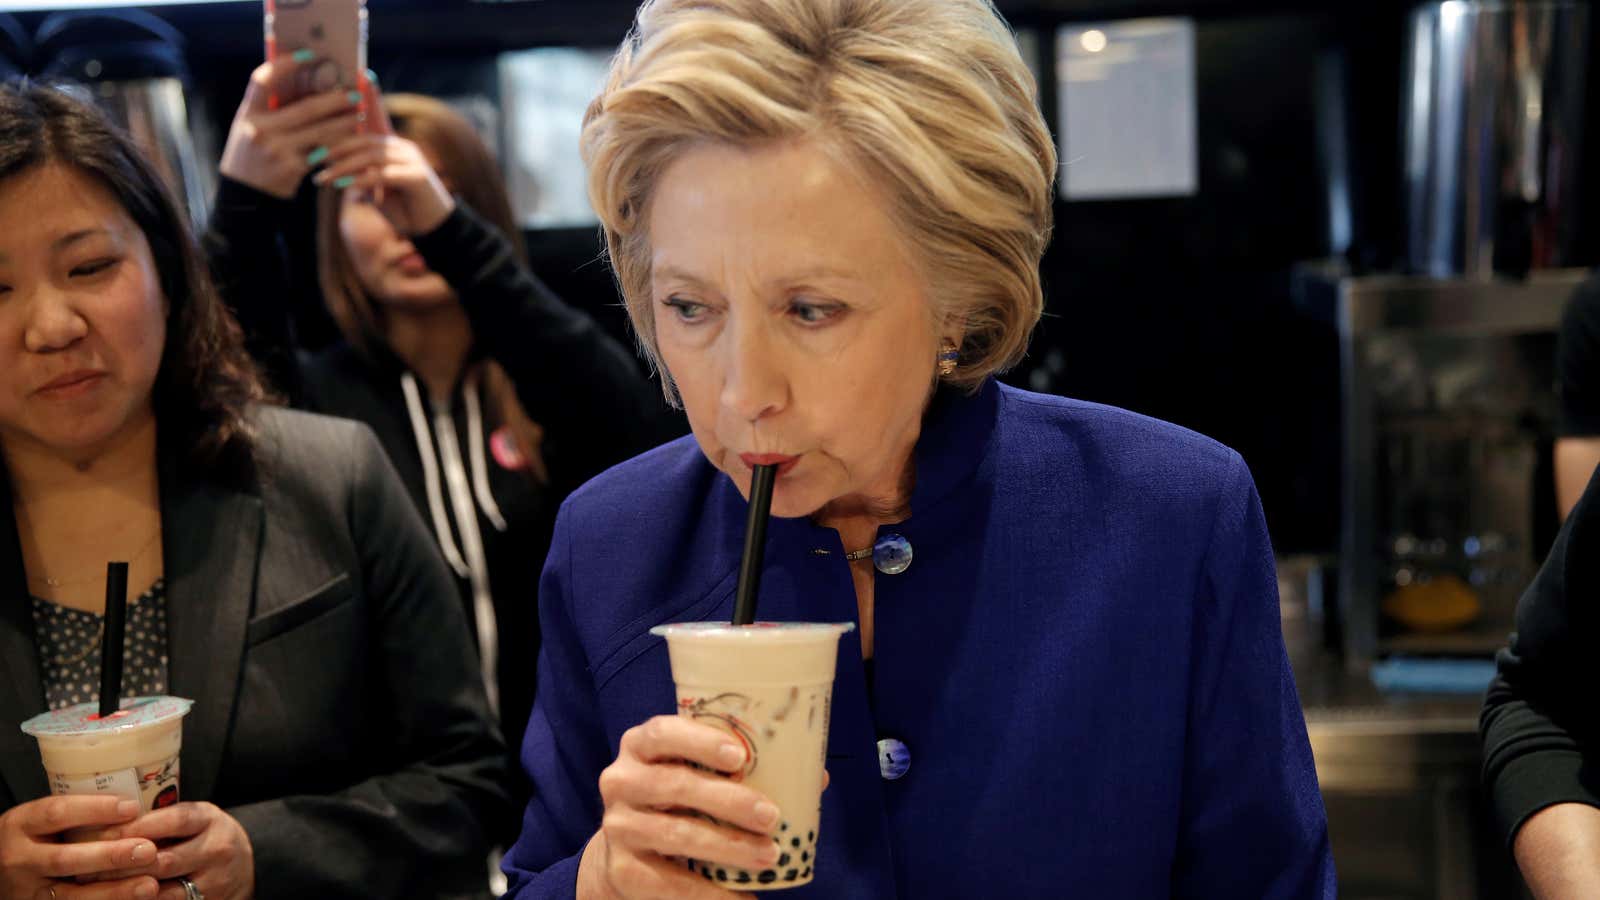 REUTERS/Mike Segar – Hillary Clinton drinks a bubble tea drink